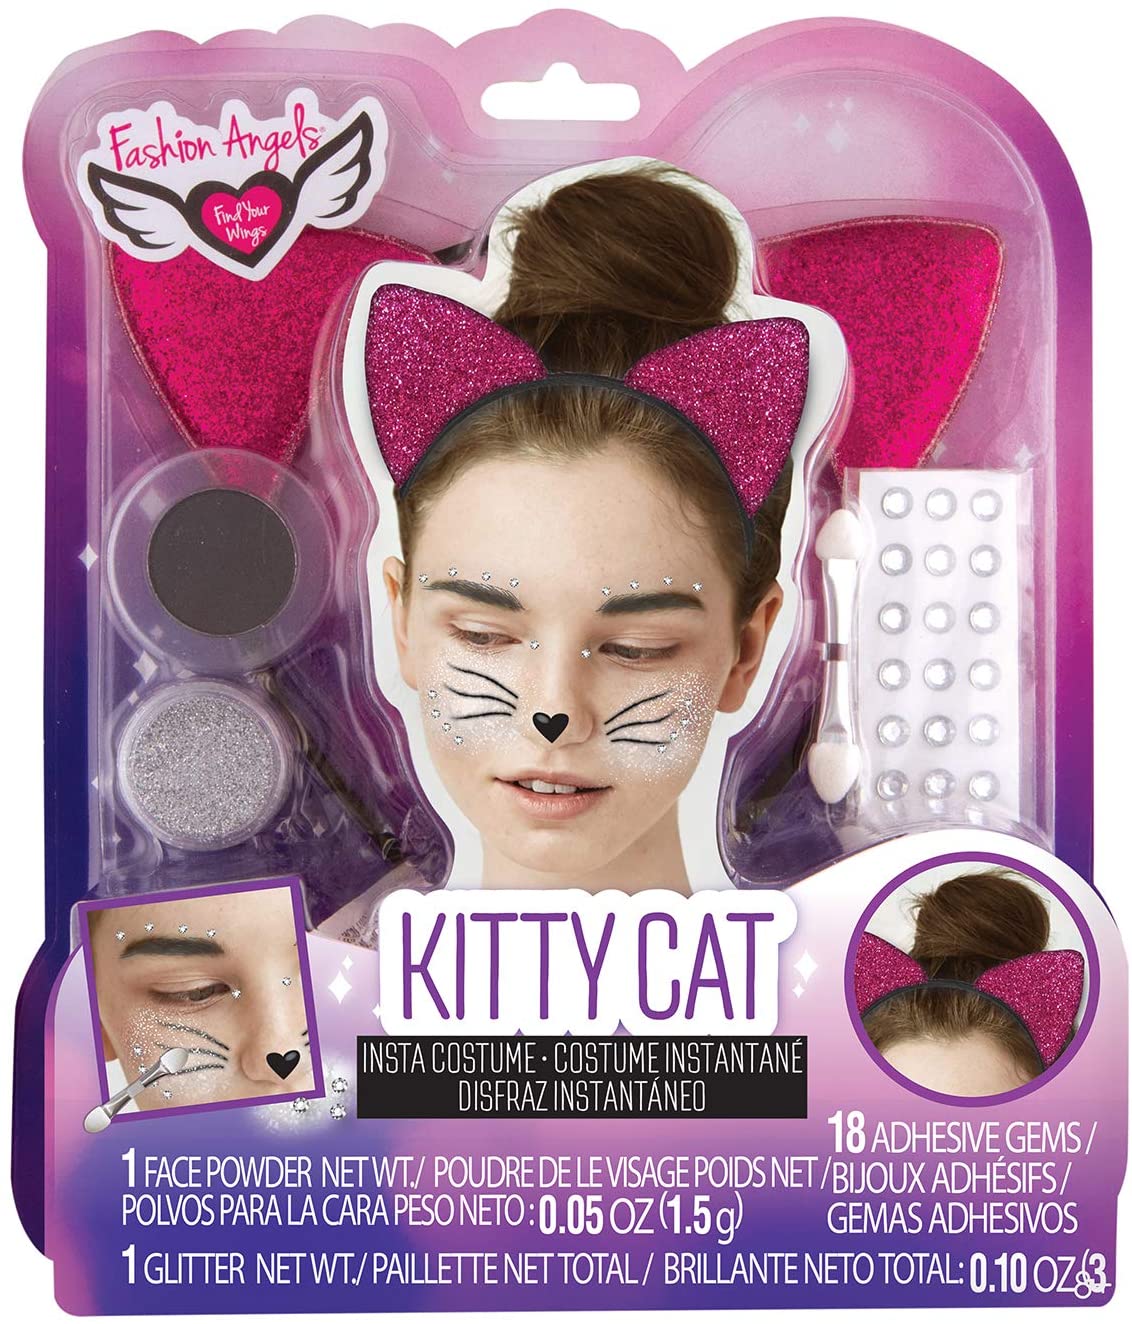 Kitty Cat Insta Costume